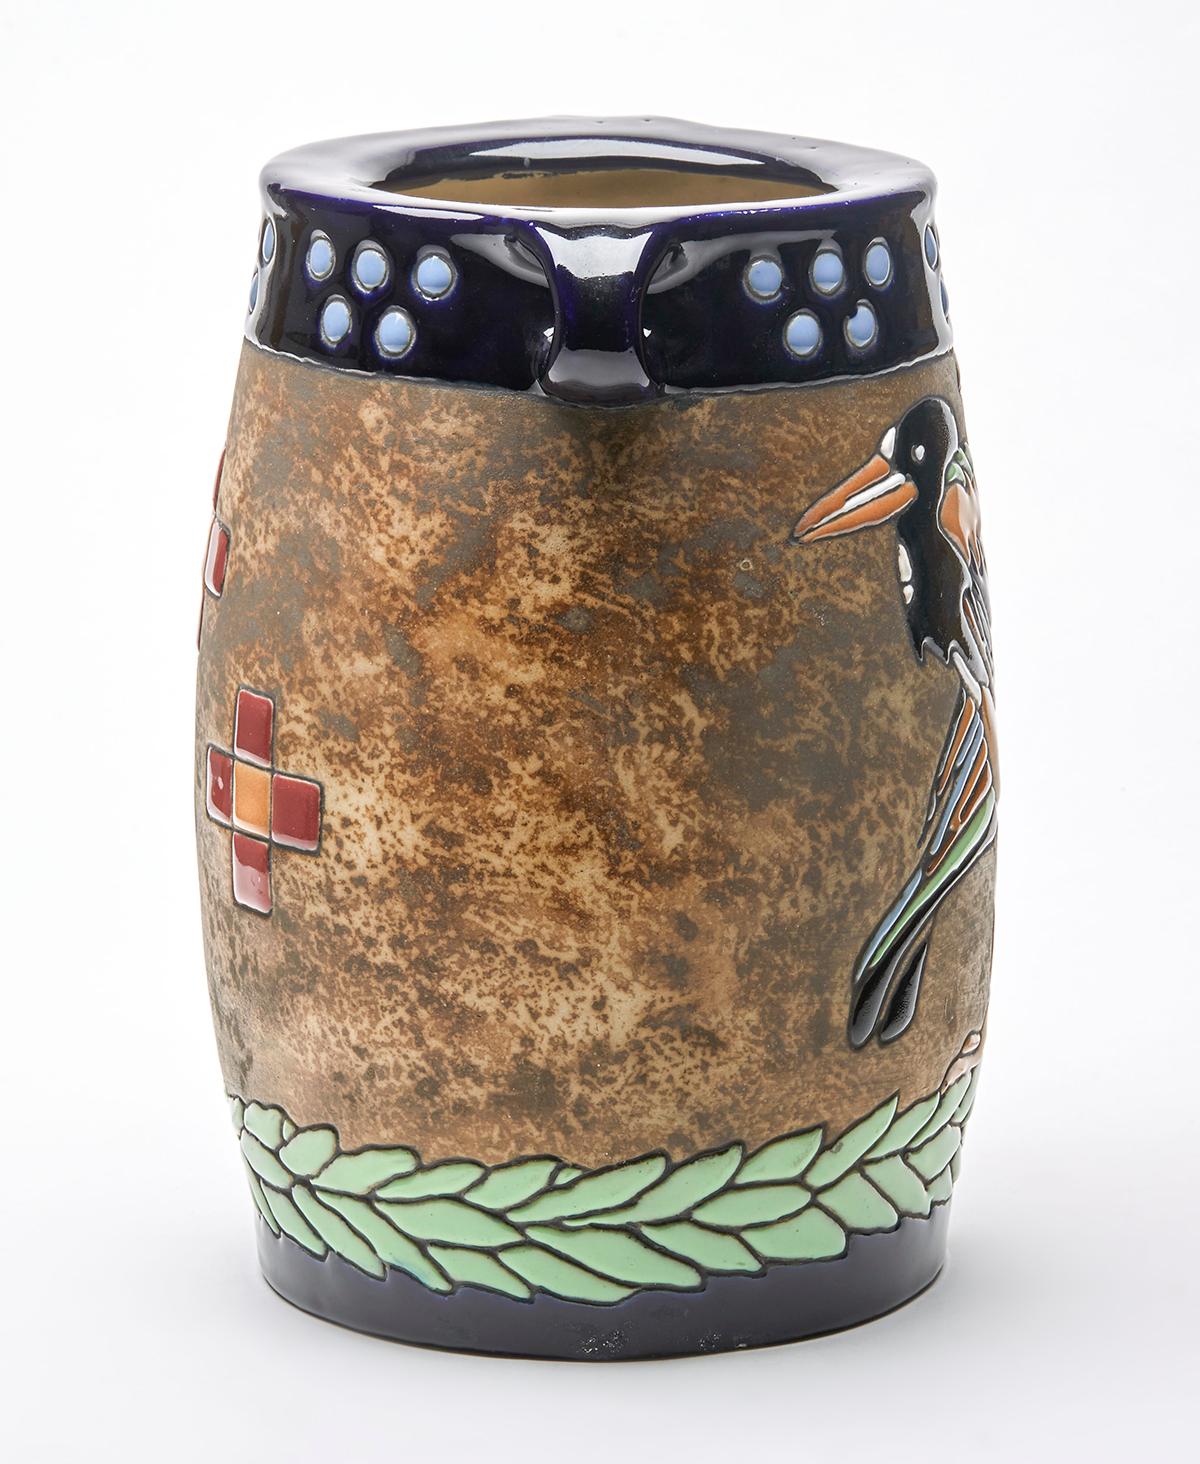 Ceramica Vaso Imperial Amphora in stile Art Nouveau austriaco con uccelli  in vendita